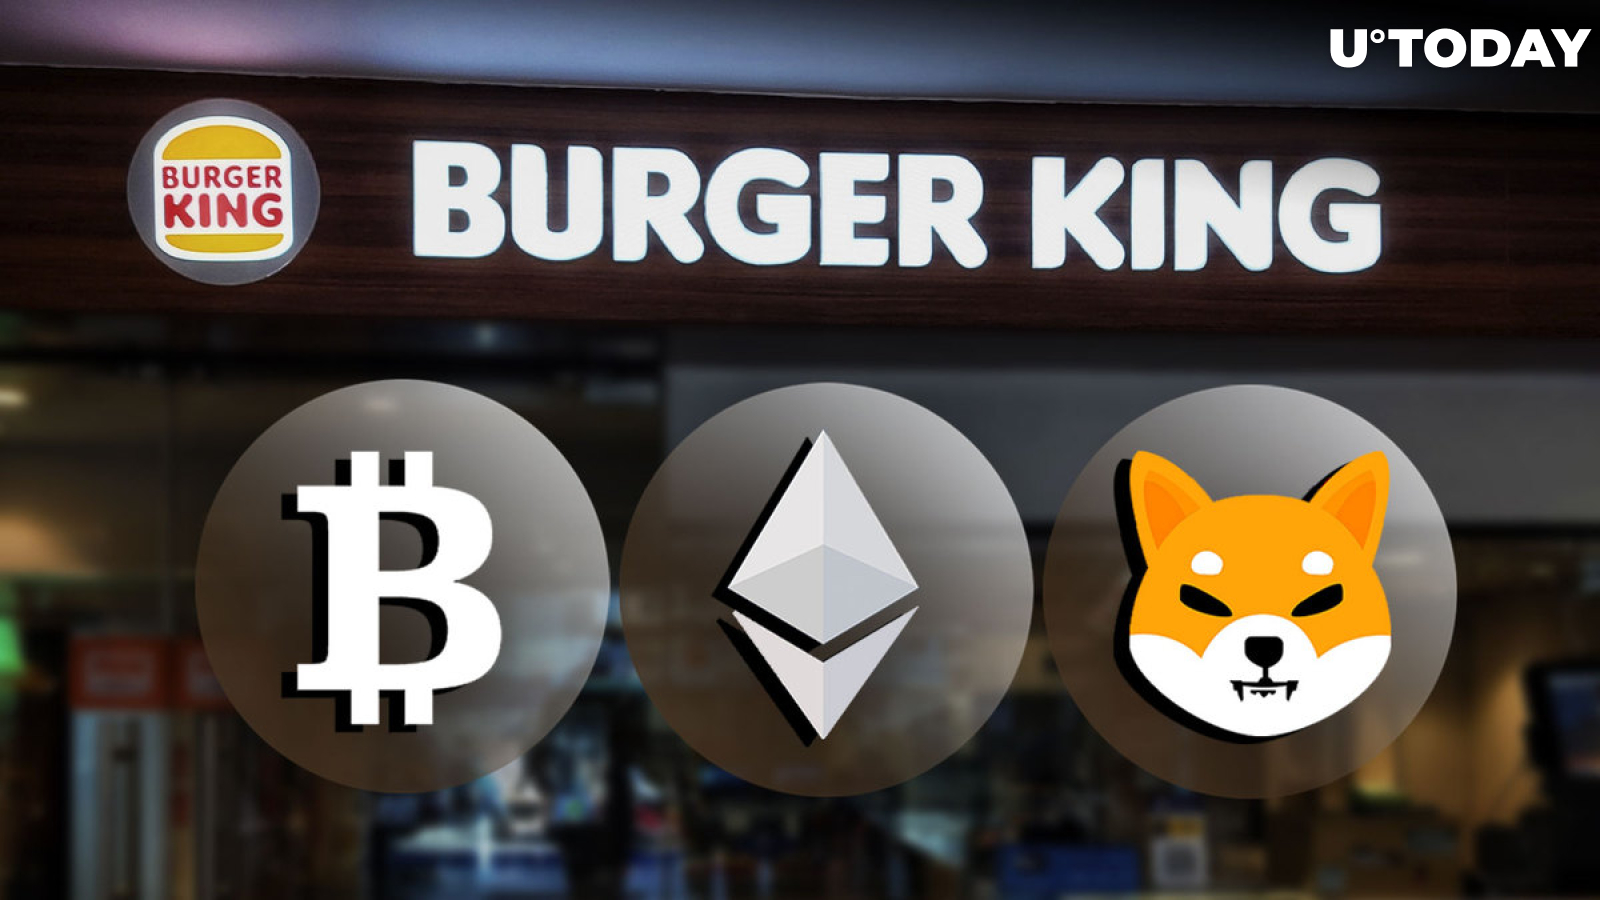 Bitcoin (BTC), Ethereum (ETH), Shiba Inu (SHIB) Other Cryptos Accepted at Burger King Paris Restaurants via This Partnership